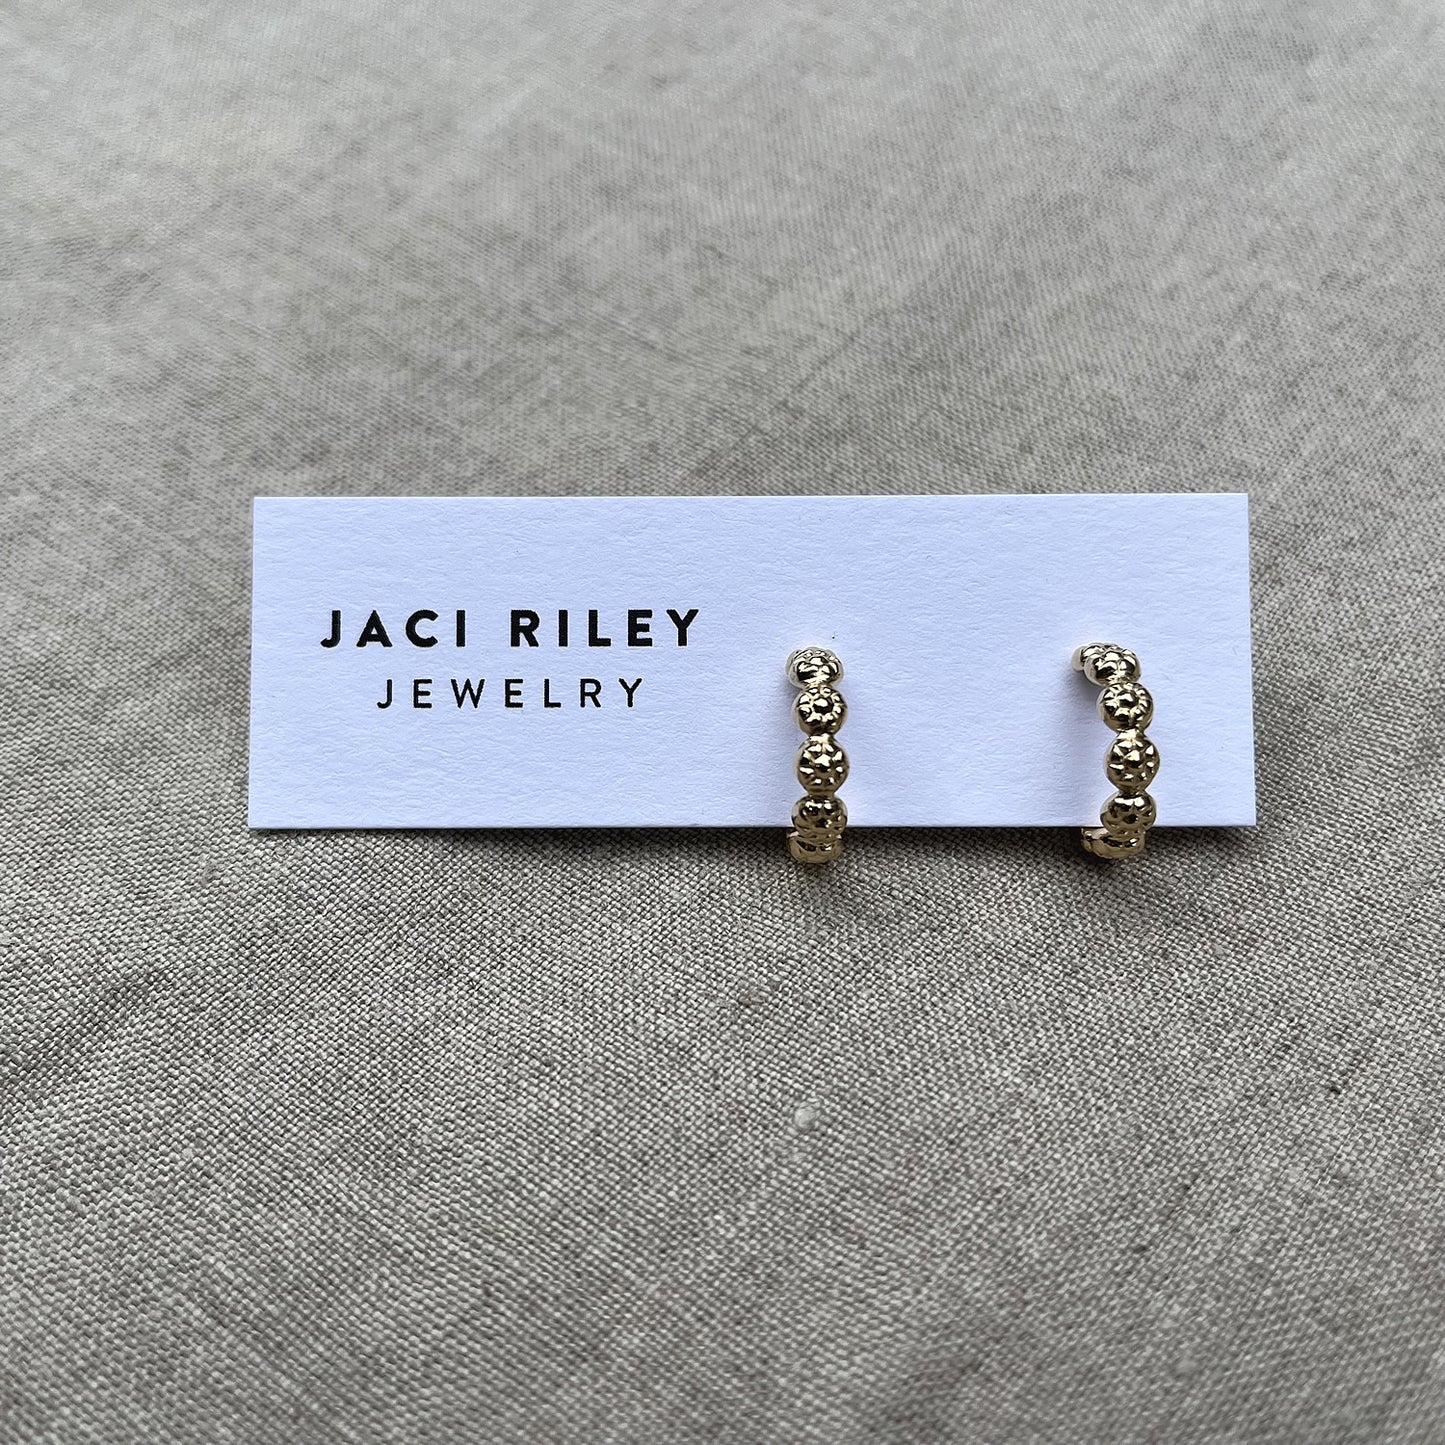 Daisy Hoops Everyday Earrings in Sterling Silver or Gold Vermeil